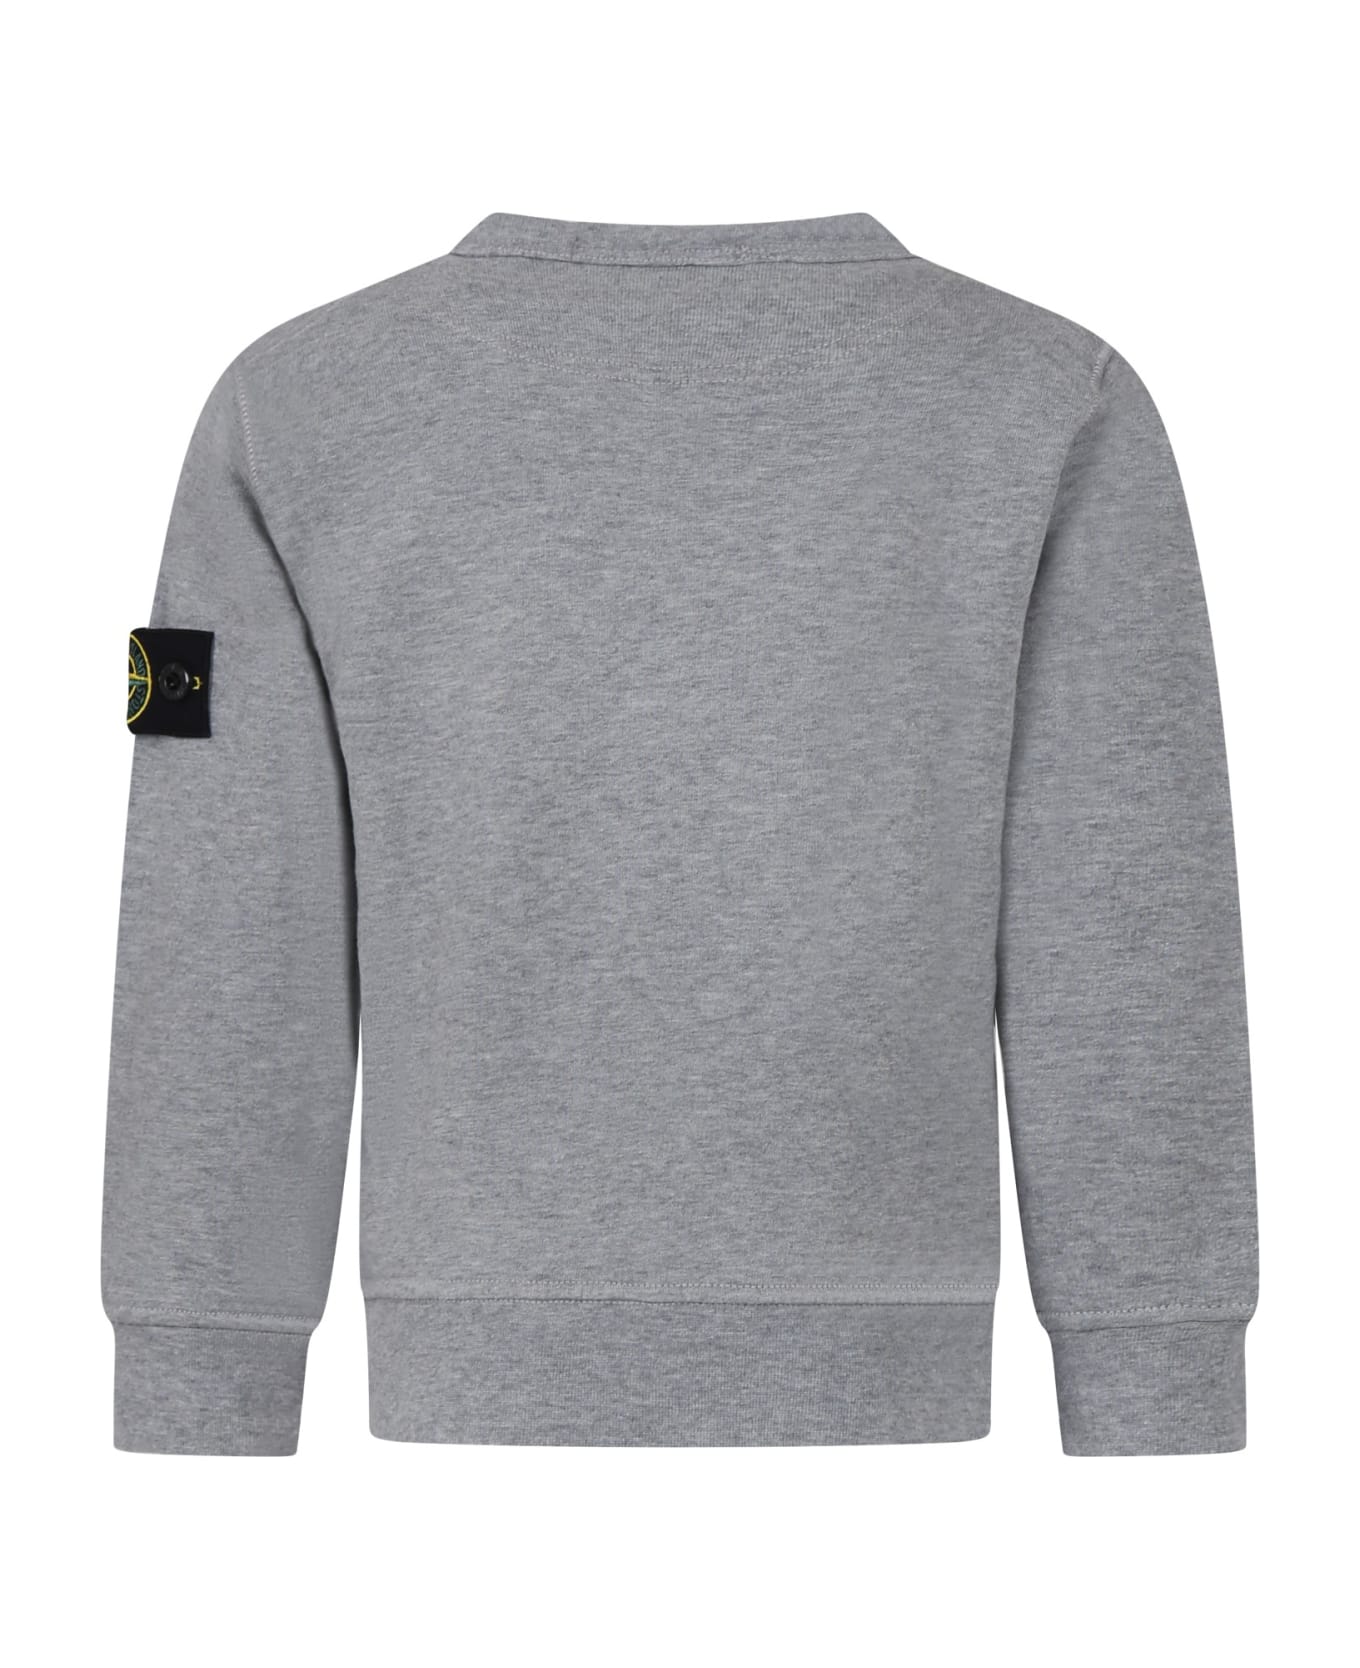 Stone Island Junior Grey Sweatshirt For Boy With Iconic Logo - Grey